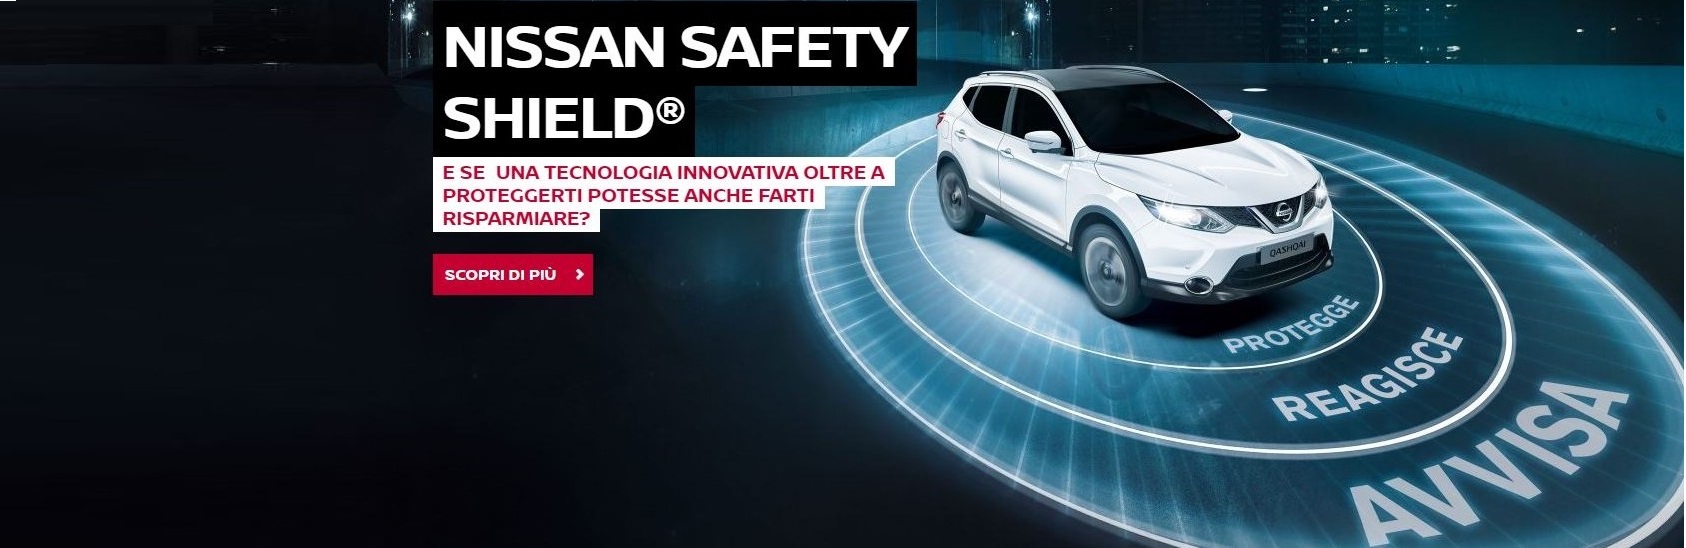 Nissan safety shields